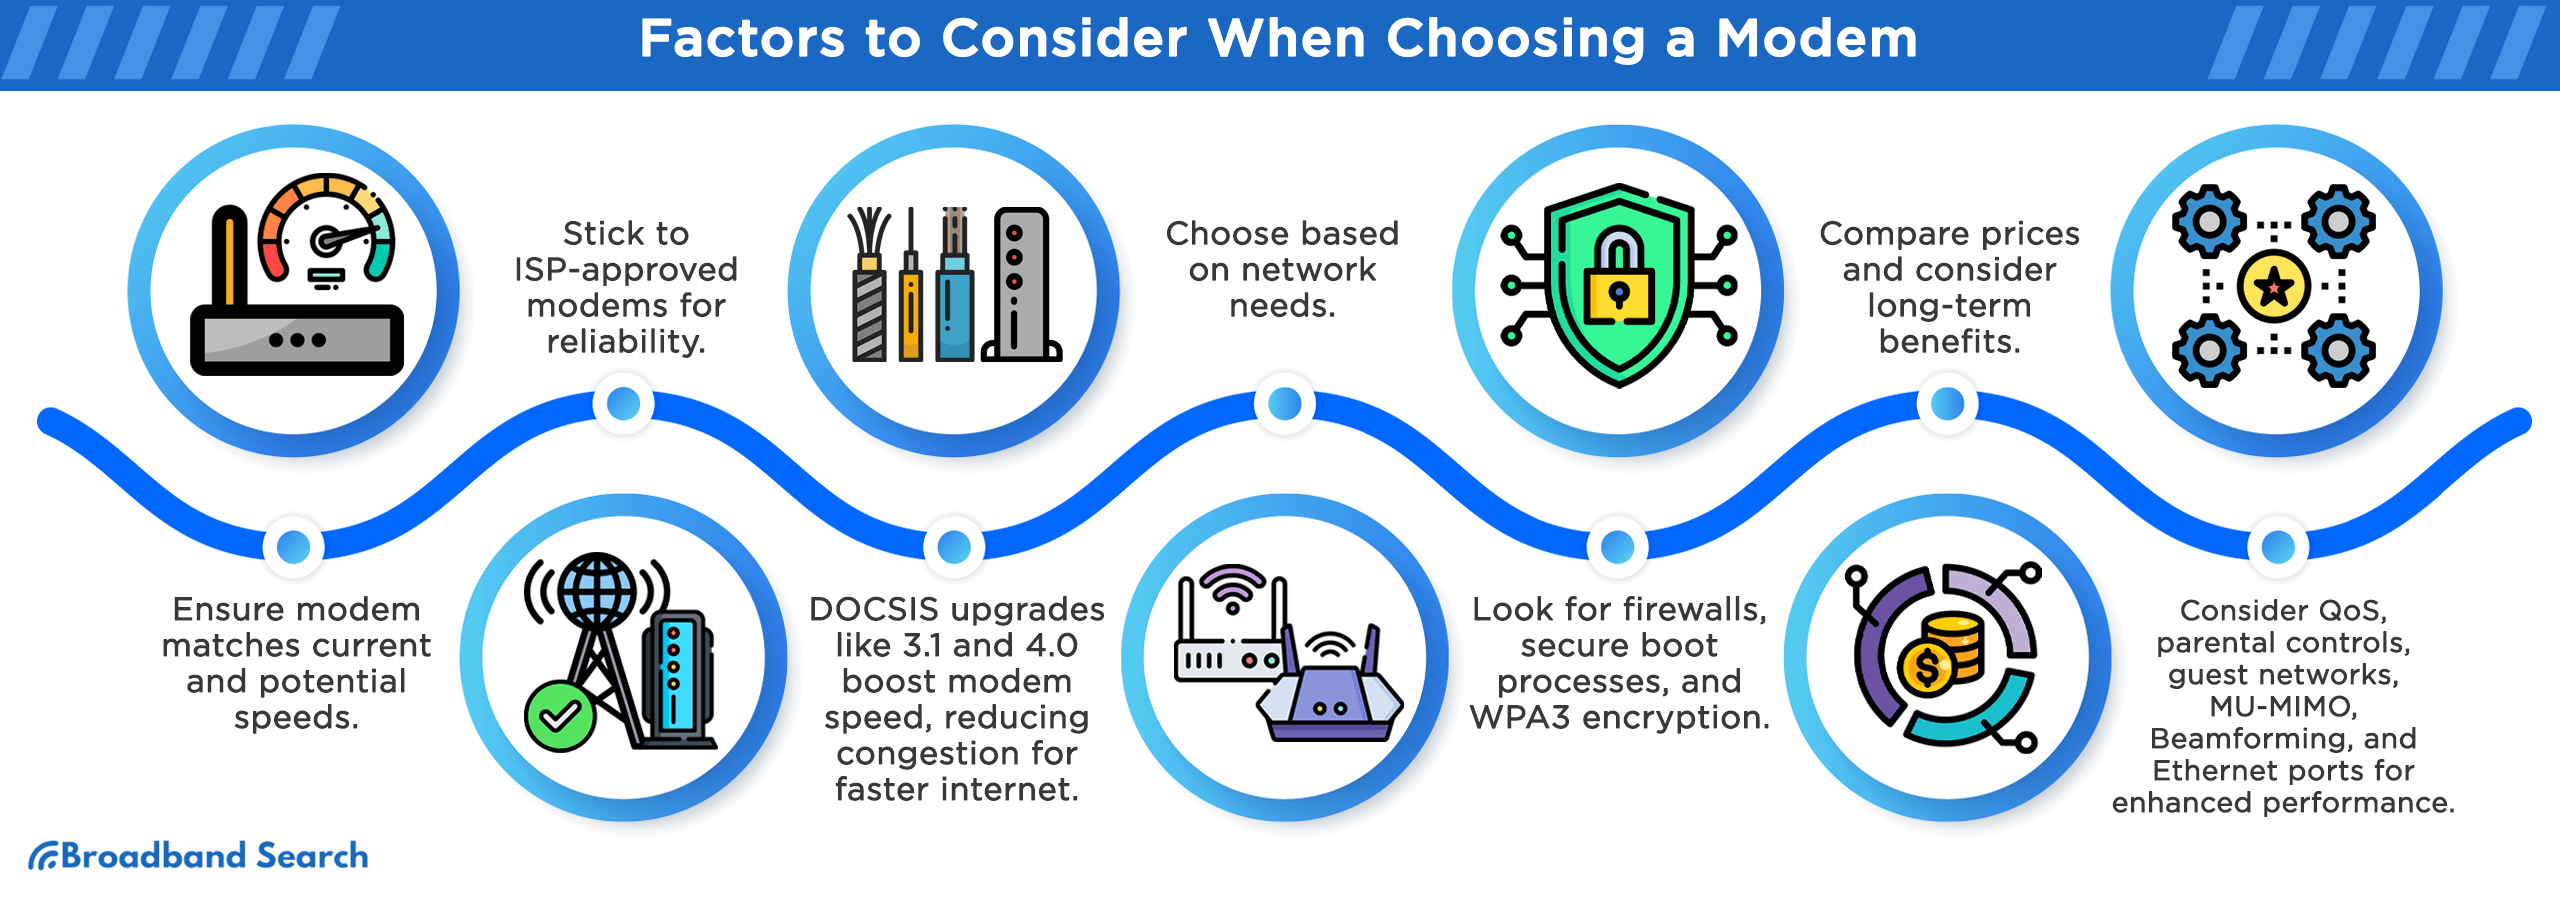 Factors to consider when choosing a modem